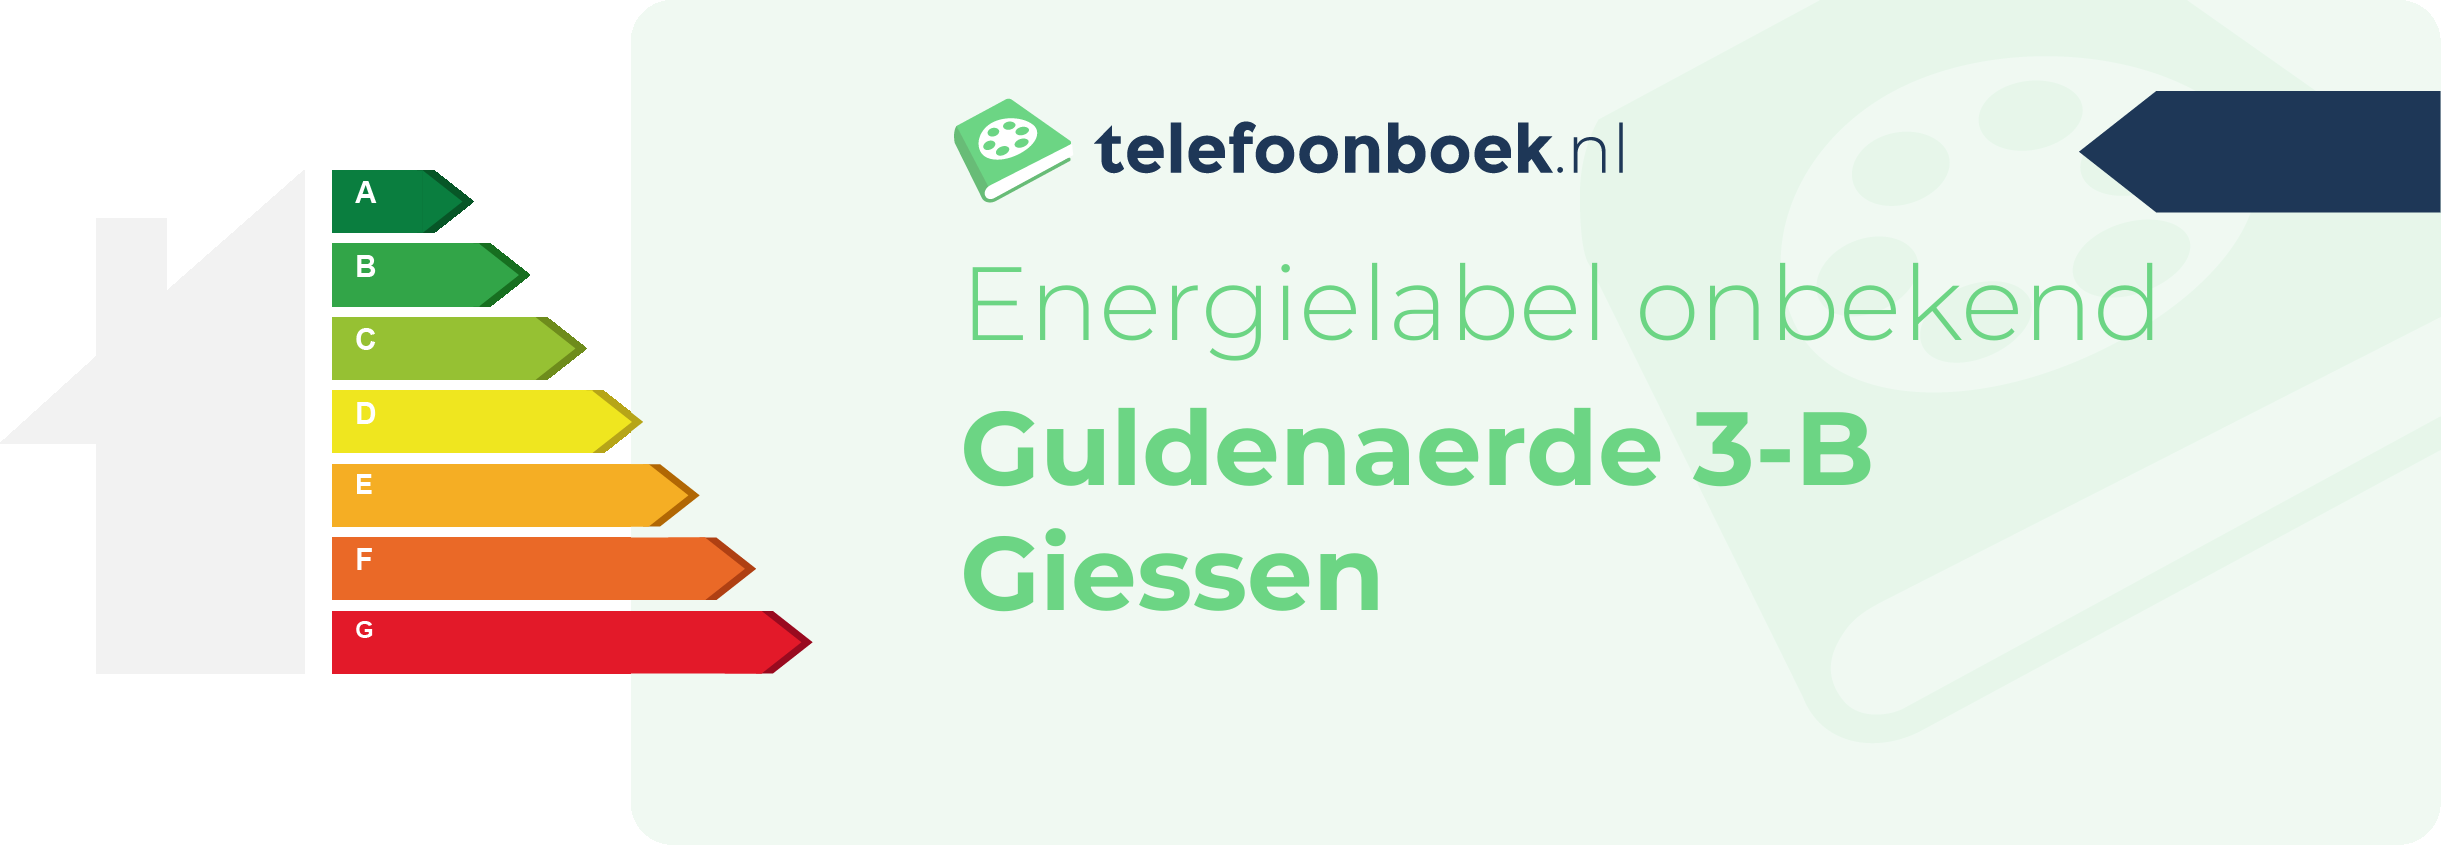 Energielabel Guldenaerde 3-B Giessen